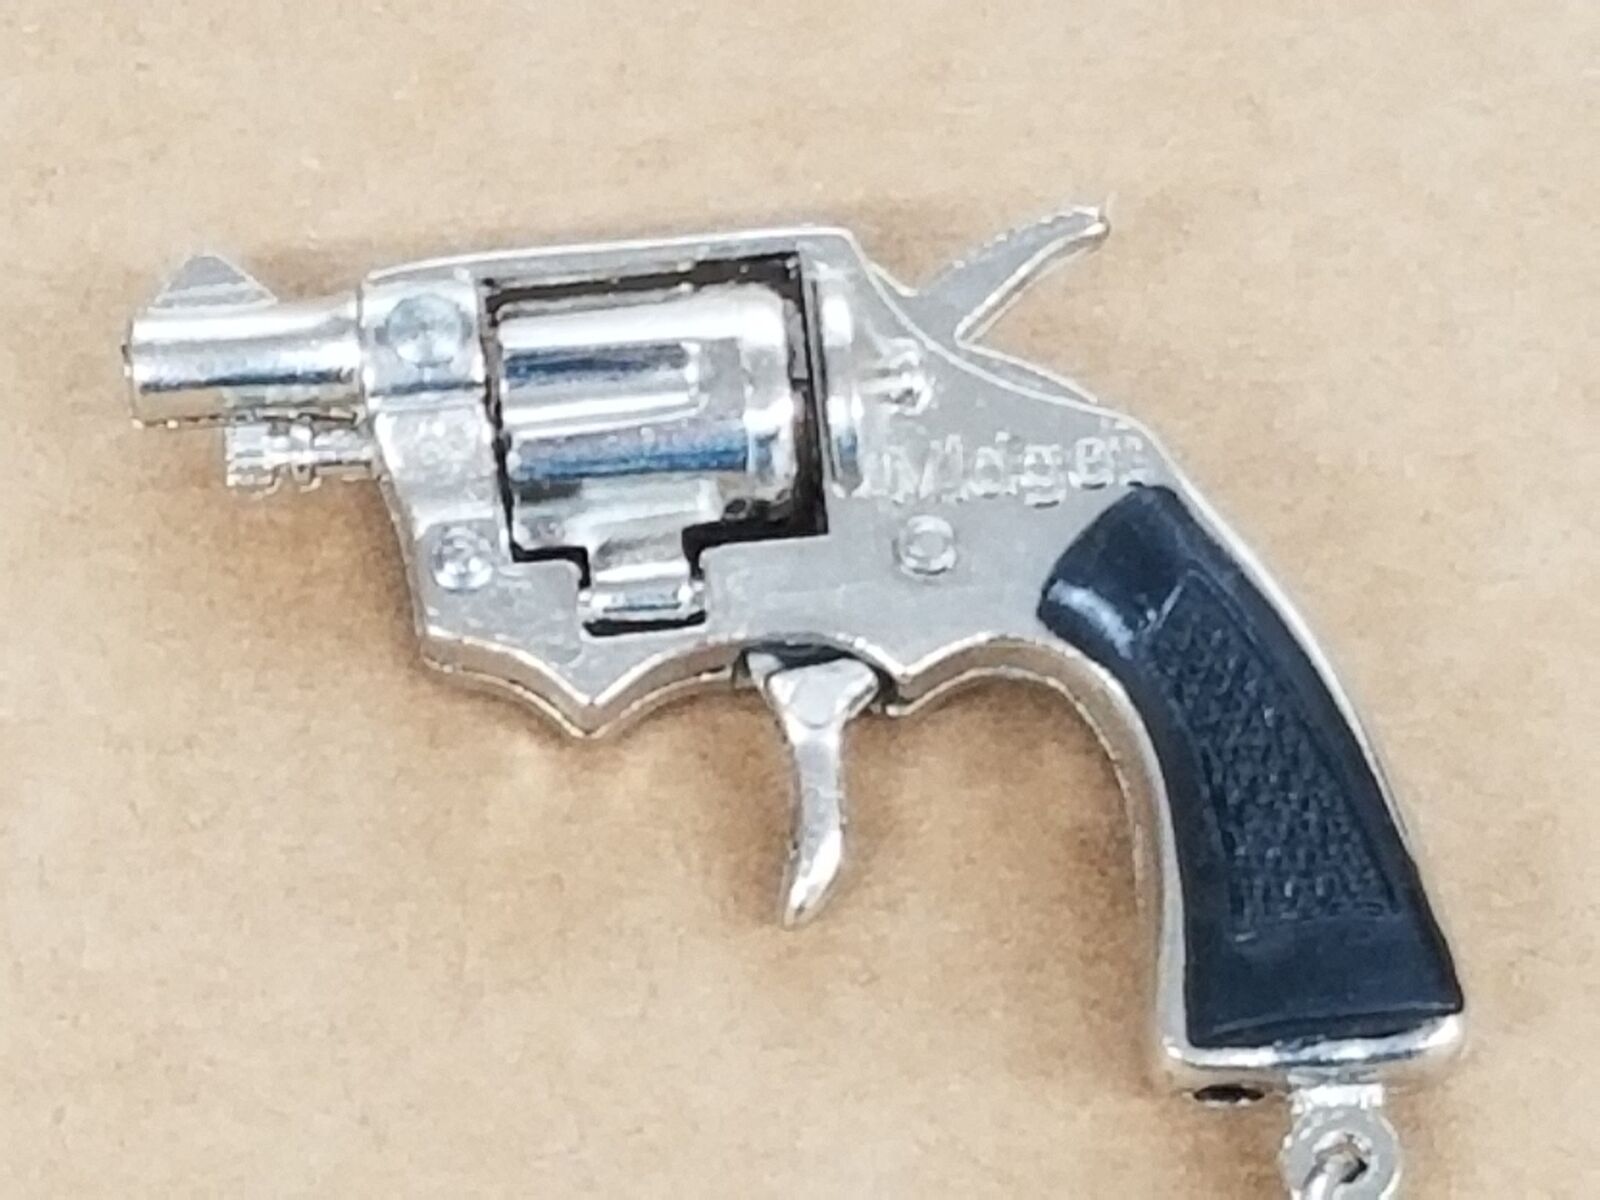 Vintage 1970's Midget Revolver Toy Cap Gun Made In Hong Kong Keychain New F1